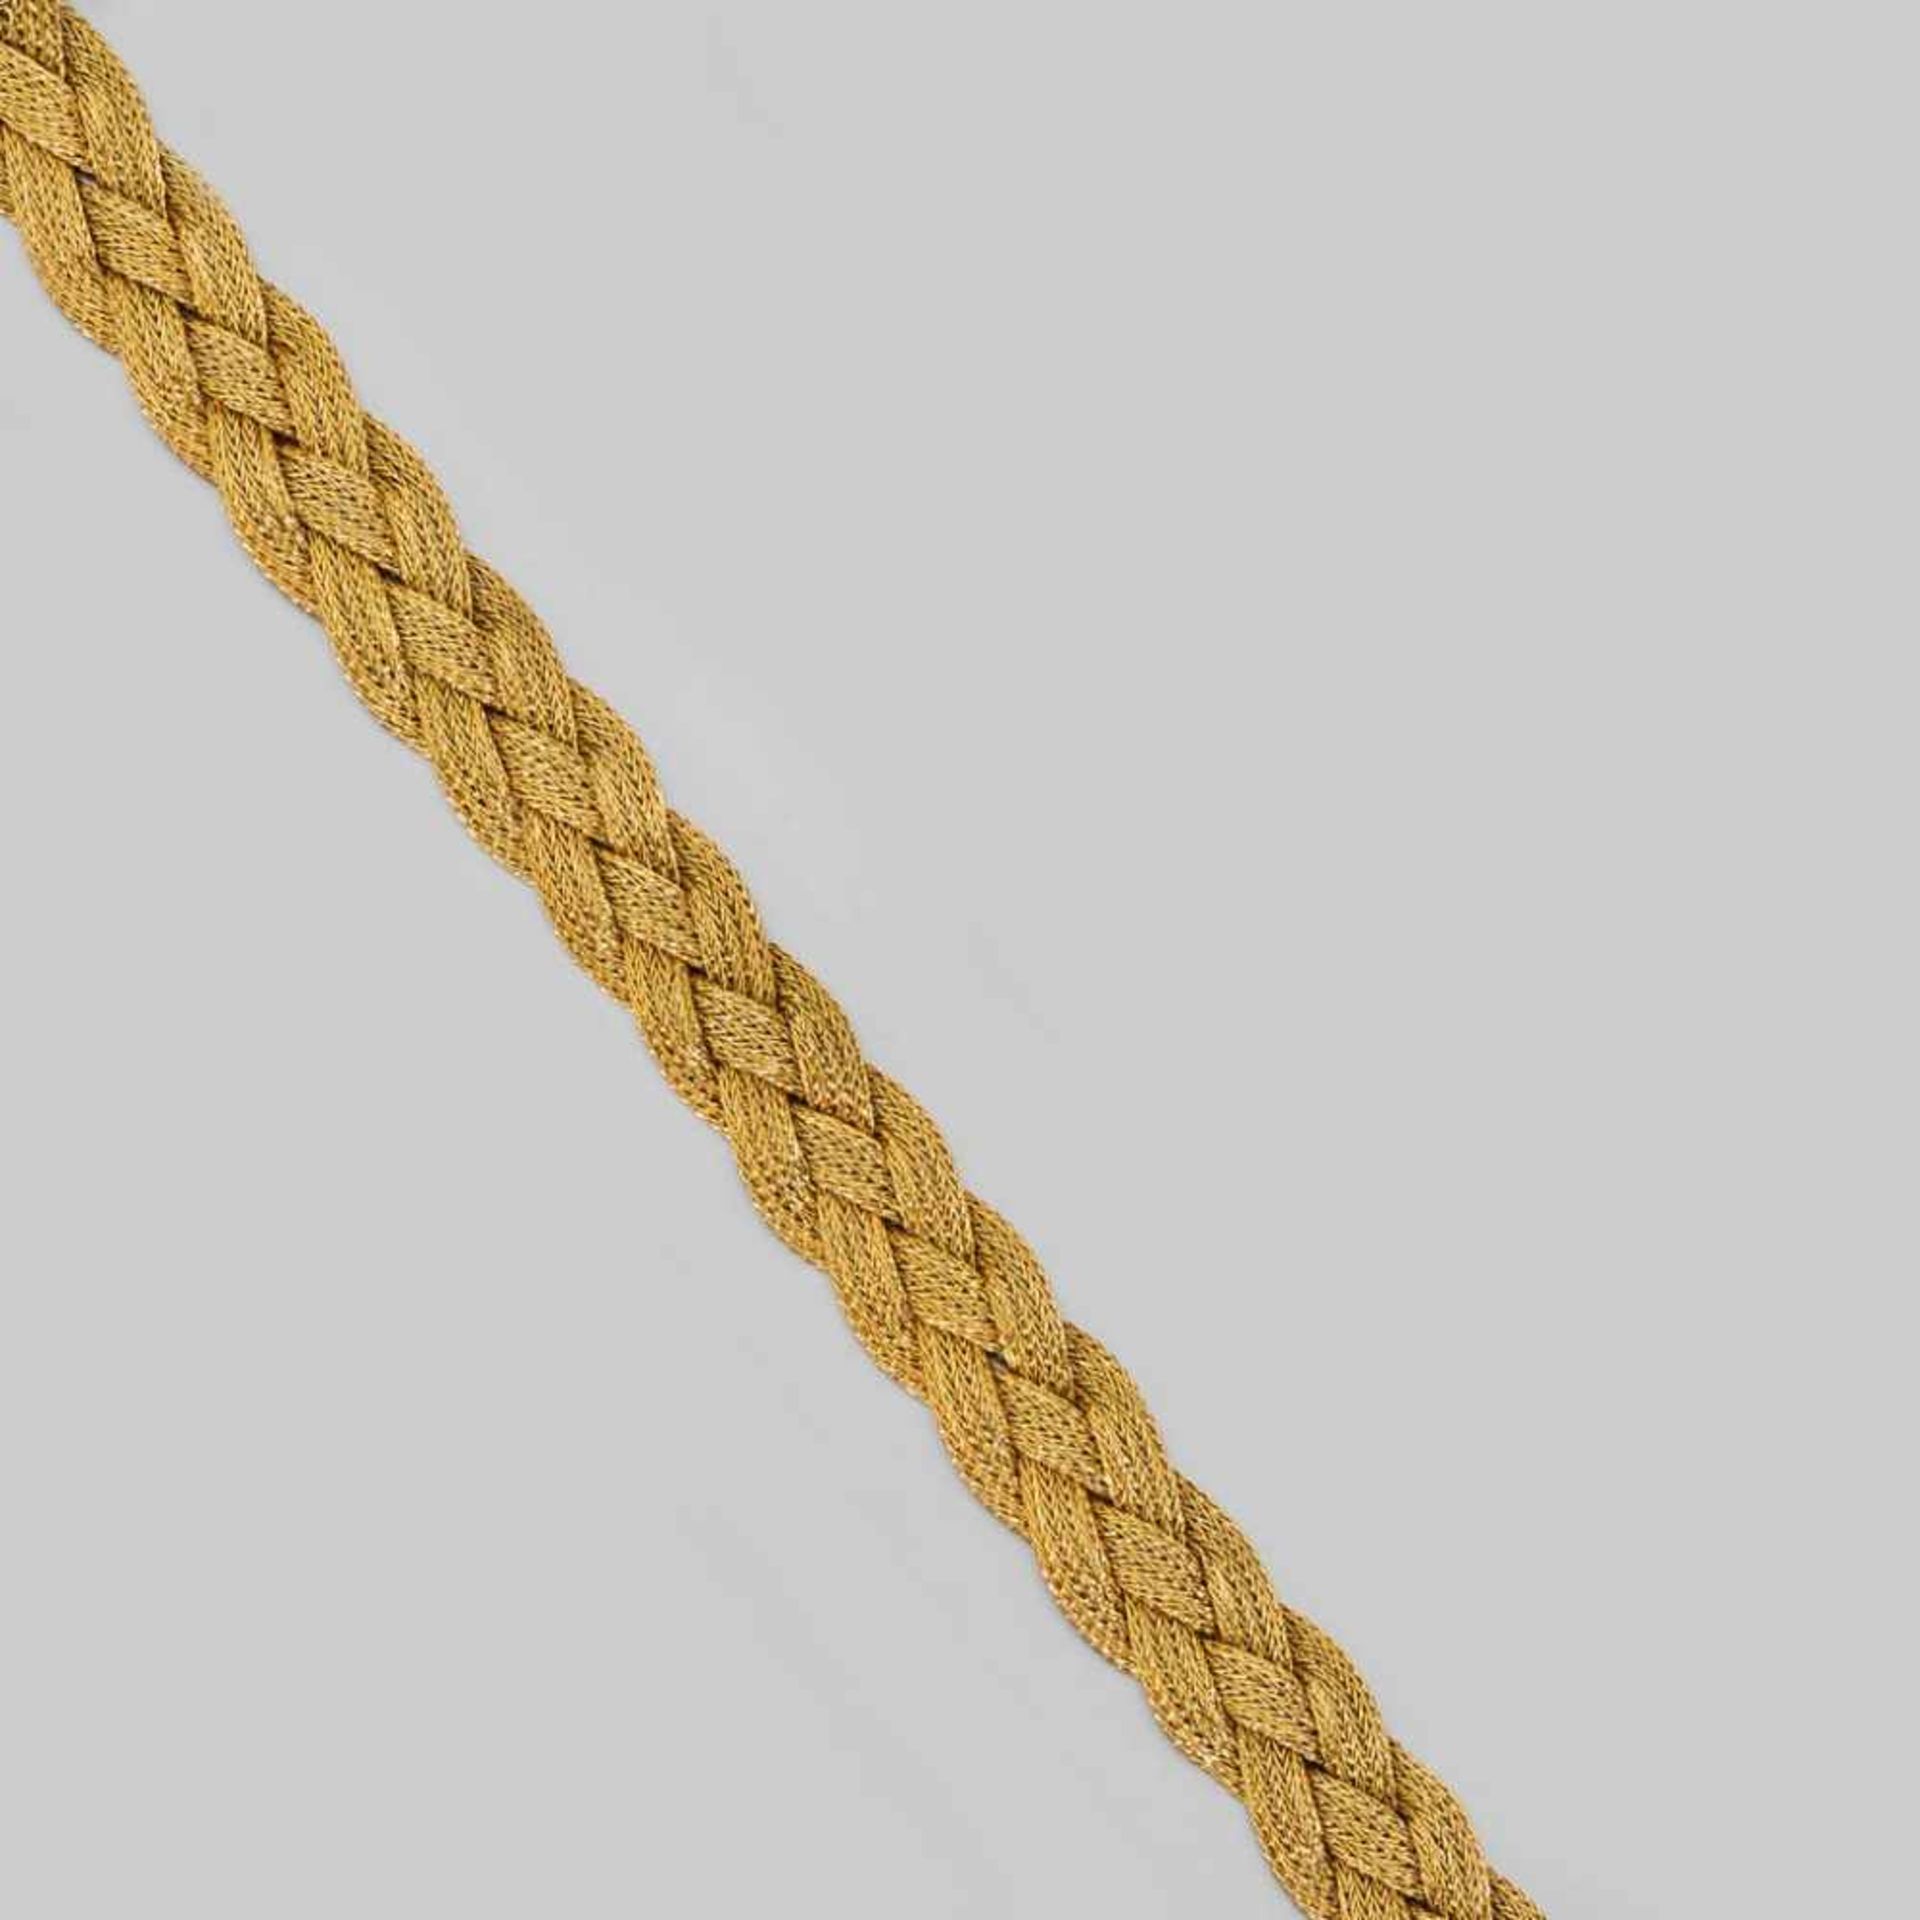 Feines goldenes Armband. Handgeflochtener Zopf aus Golddrähten in 18 ct. GG, 27 g. 1960-er/1970-er